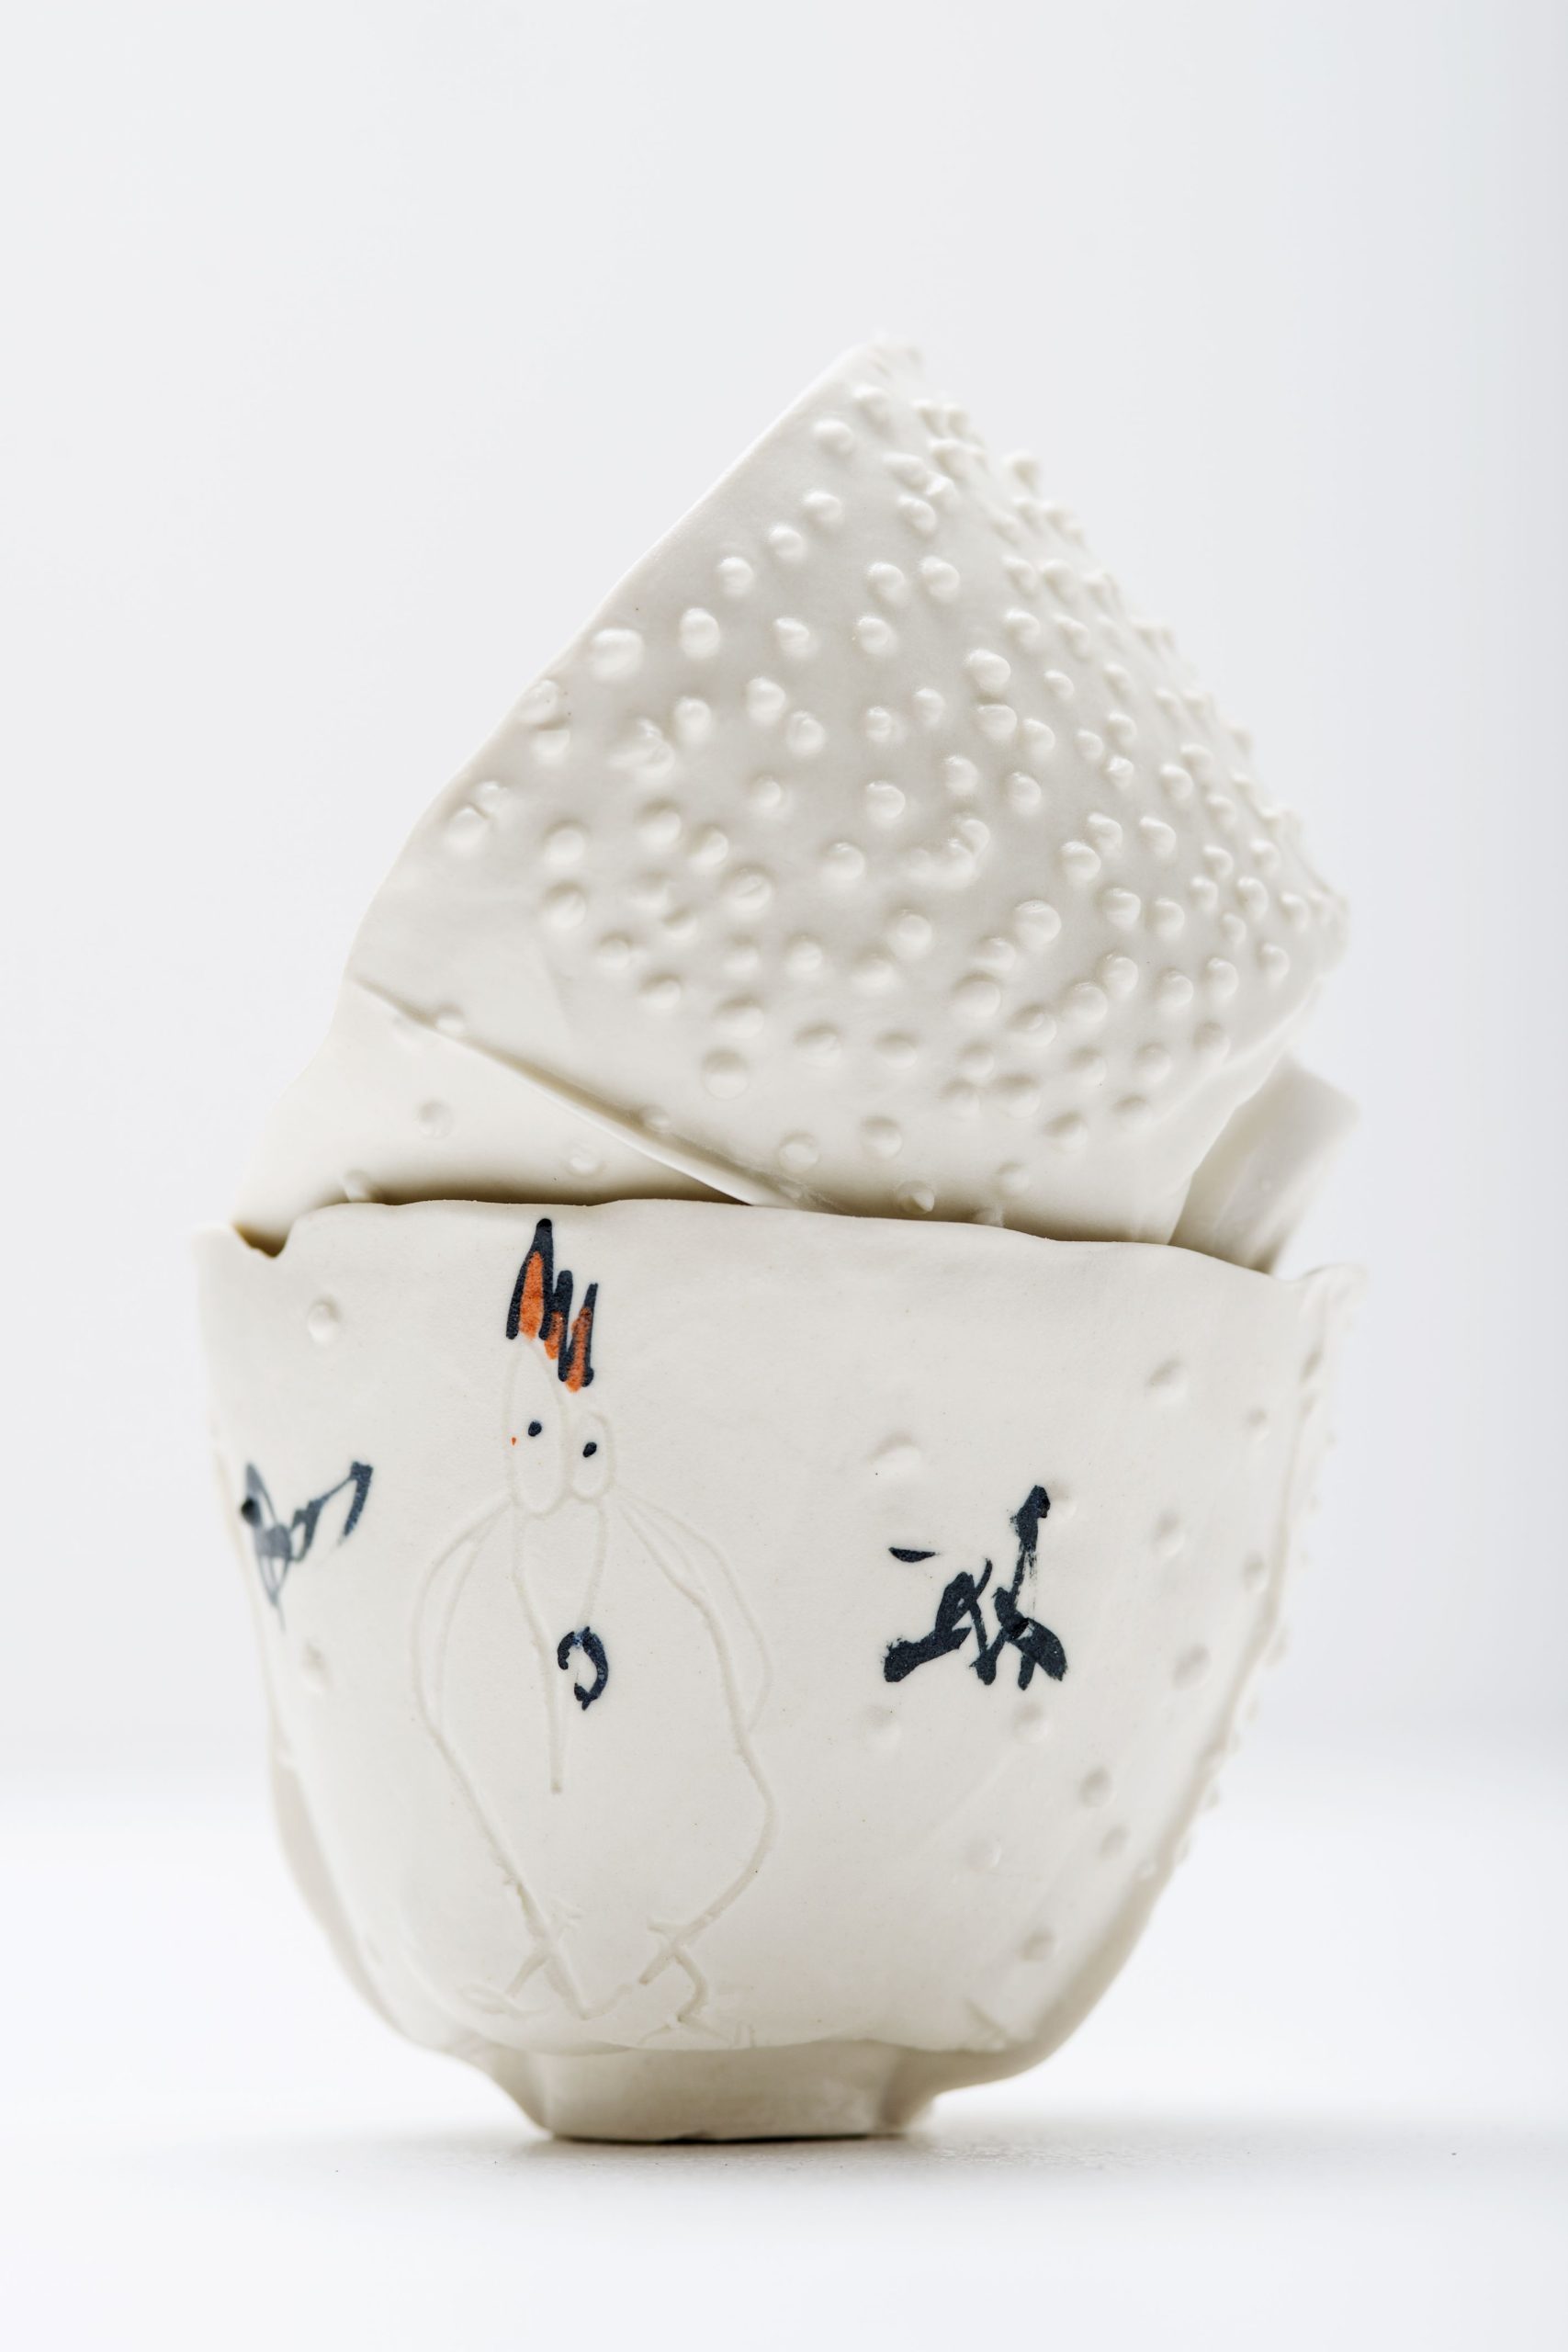 084_Sofi-Buquet-ceramique